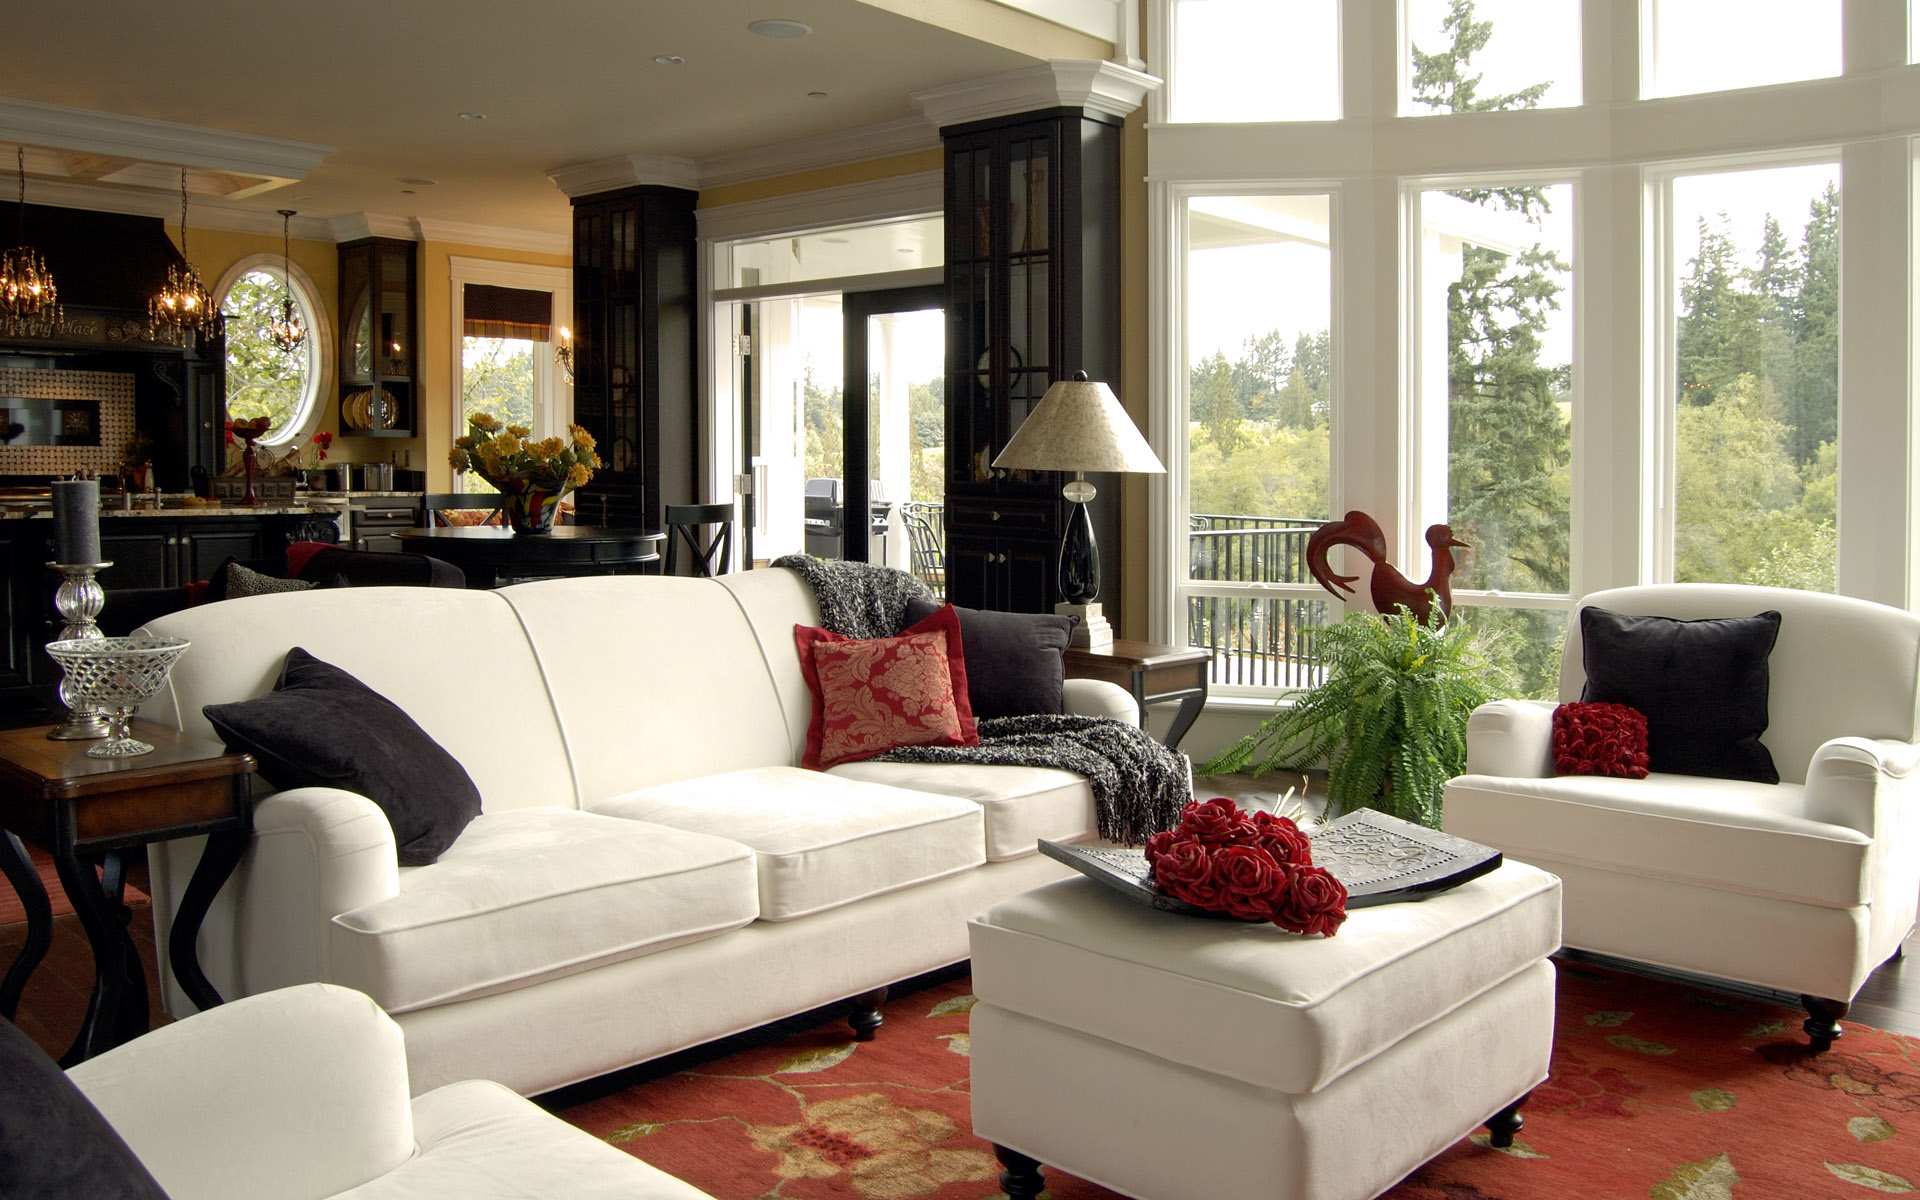 1920x1200px 8 Outstanding Interior Designs Living Rooms Ideas Picture in Interior Design